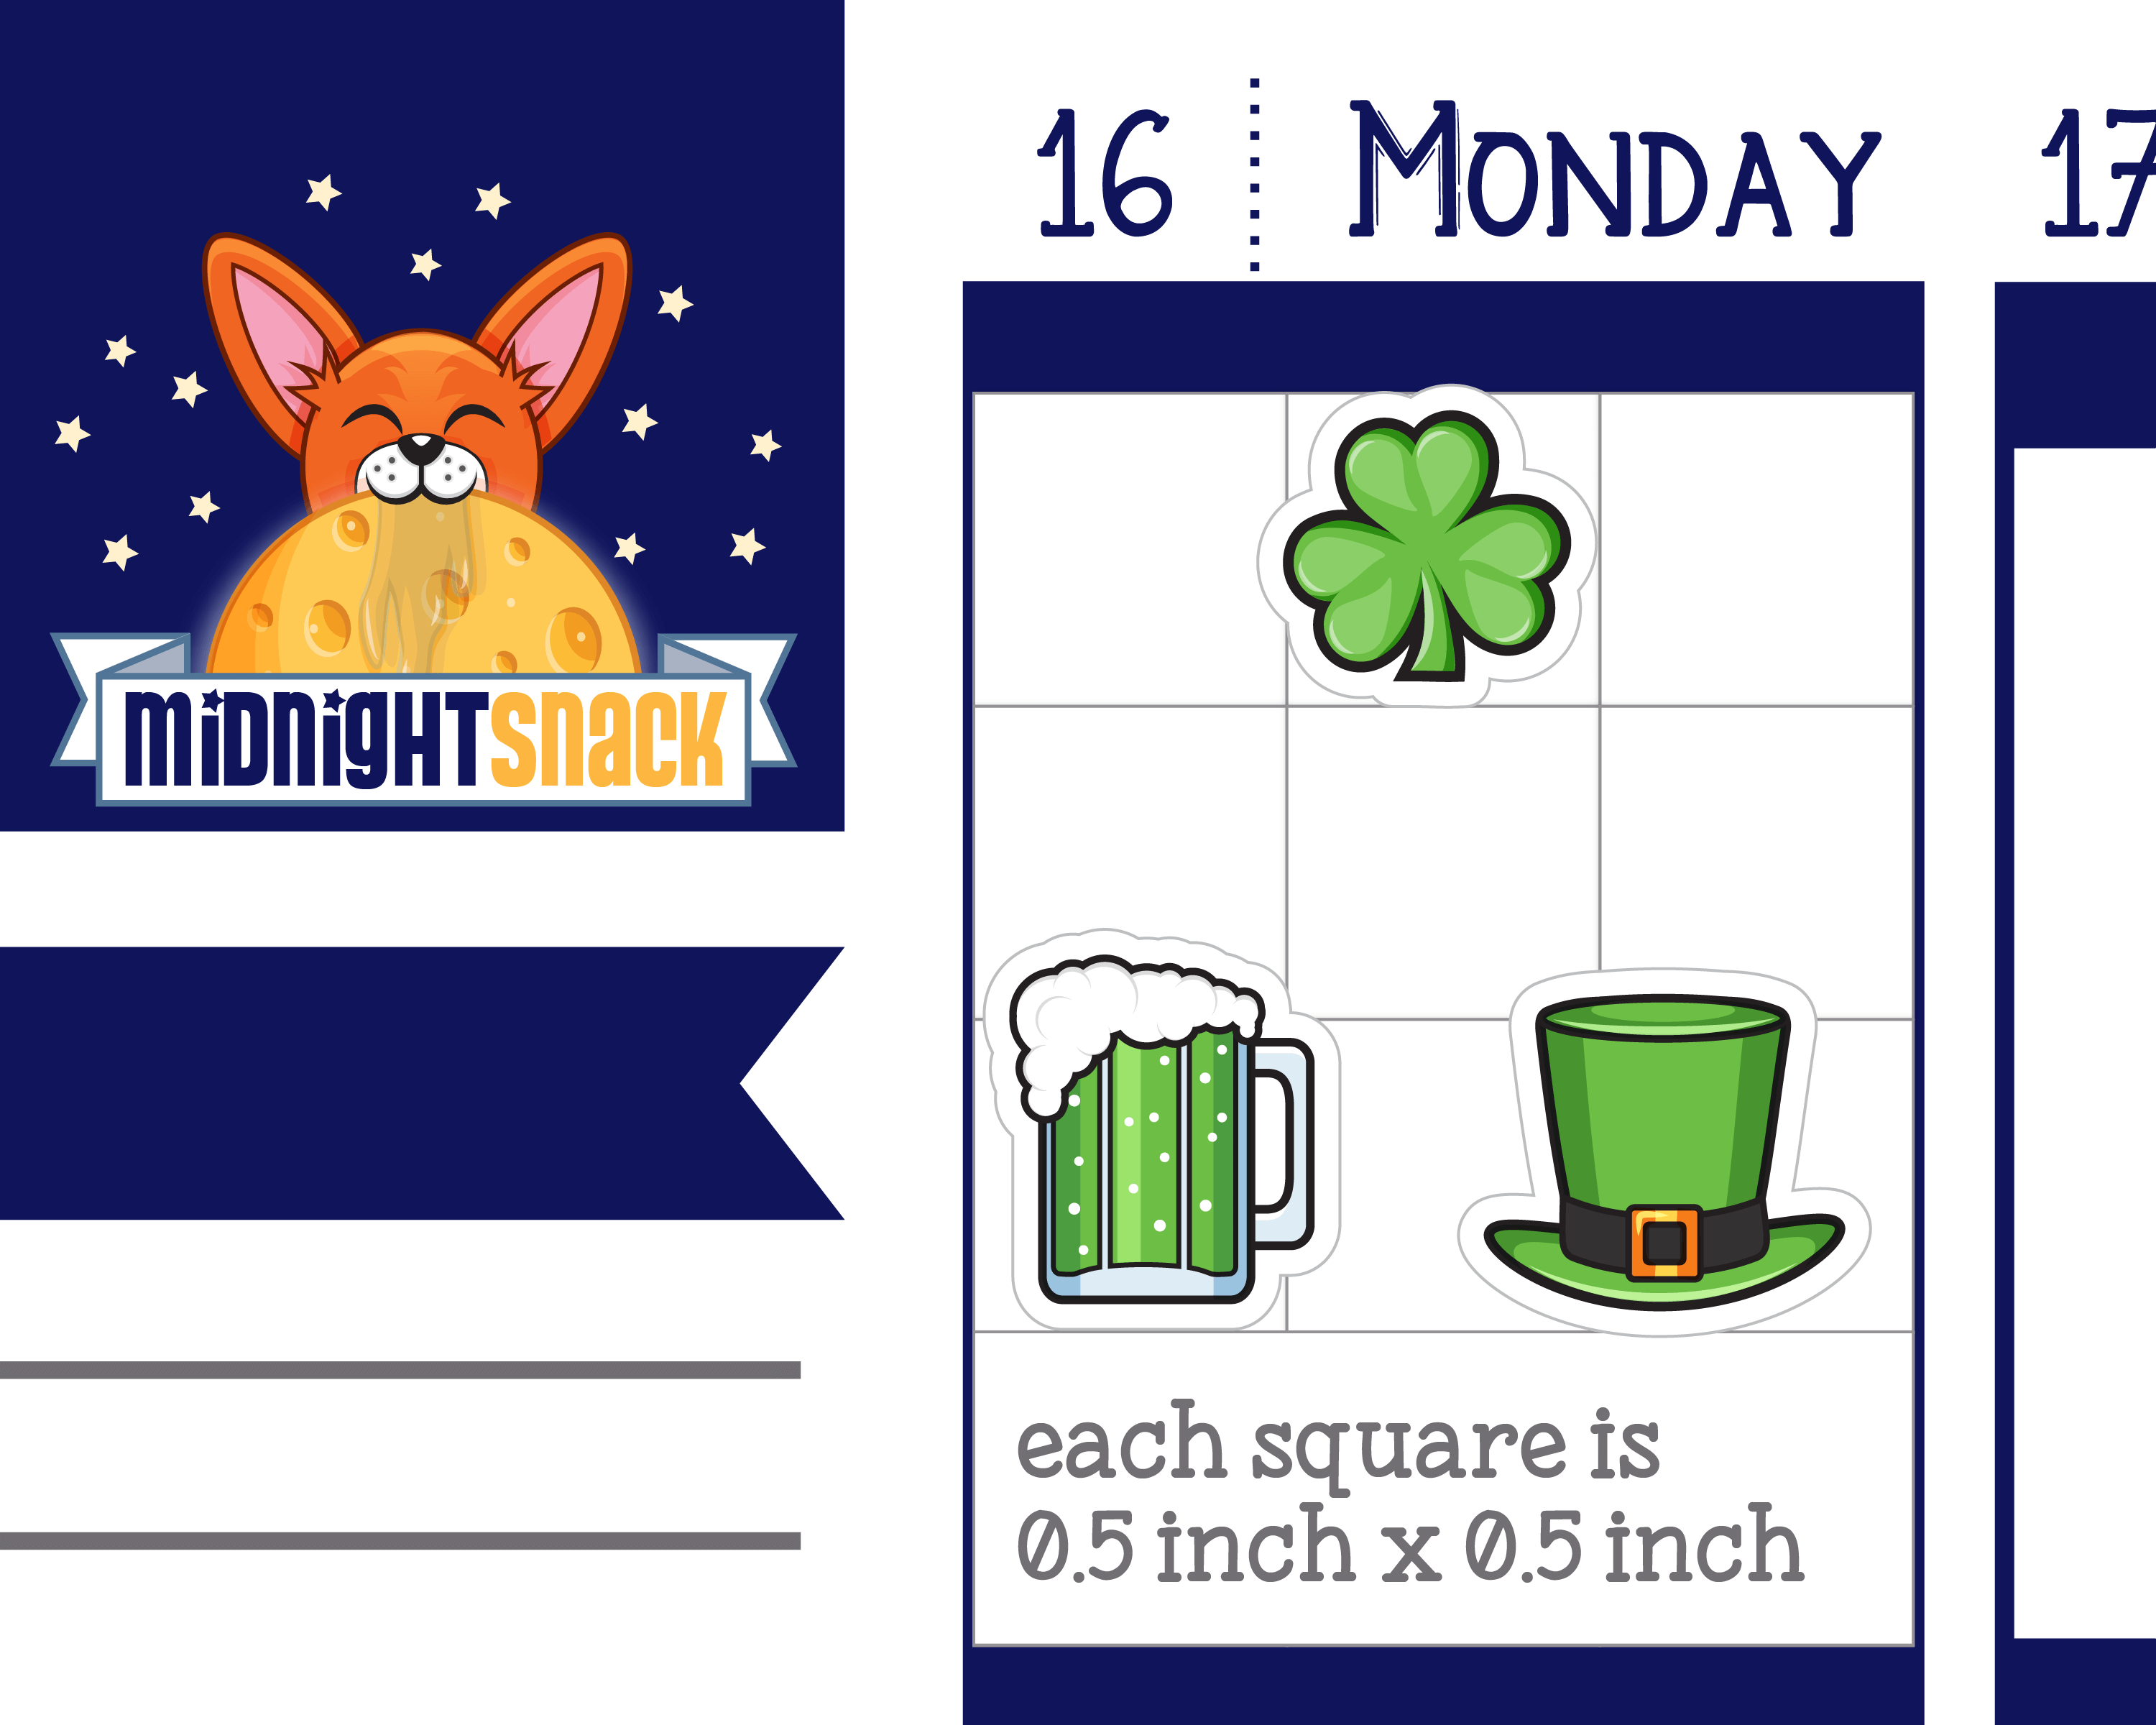 St. Patrick’s Day Sampler Planner Sticker Midnight Snack Planner